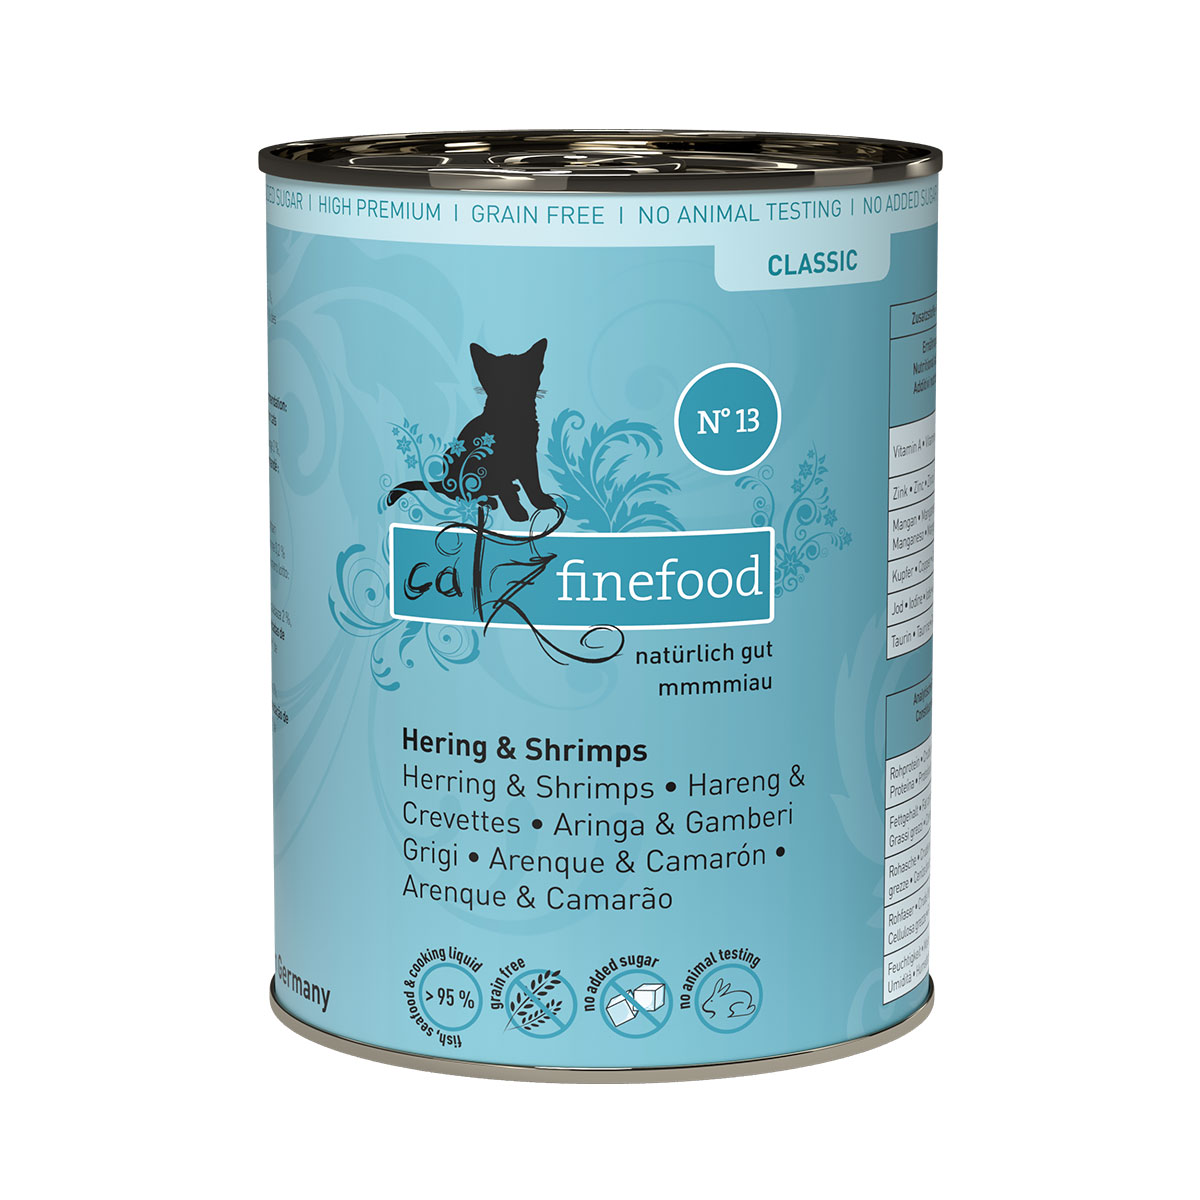 Catz Finefood Classic N° 13 – Hering & Shrimps 6x400g